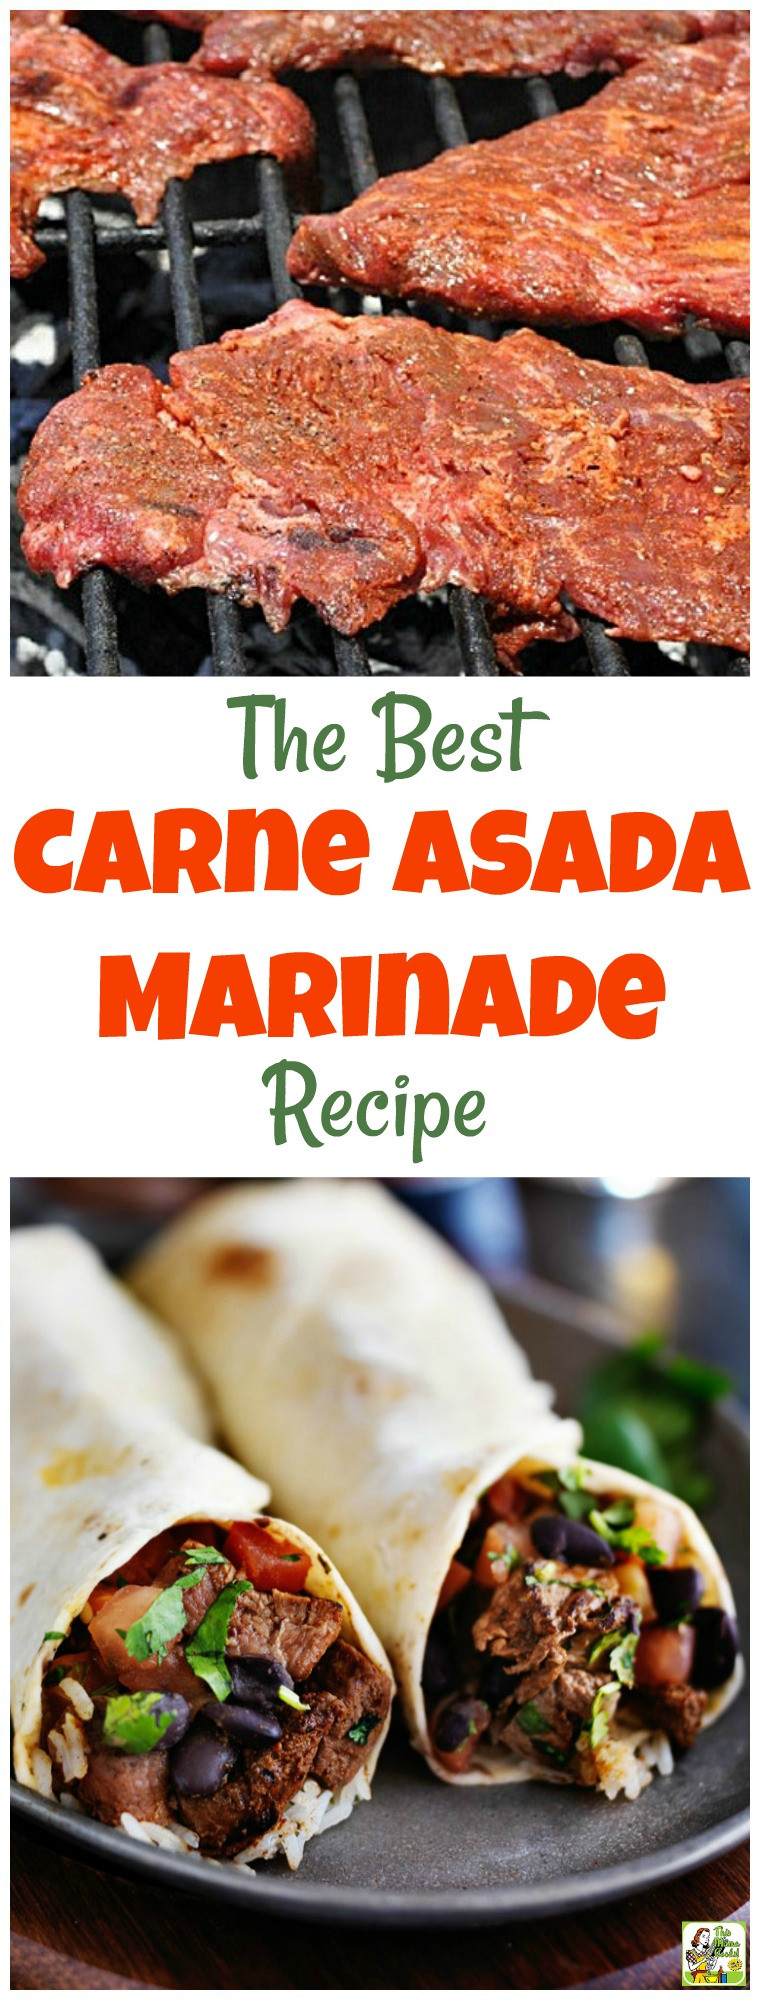 Mexican Carne Asada Recipes
 The Best Carne Asada Marinade recipe ever